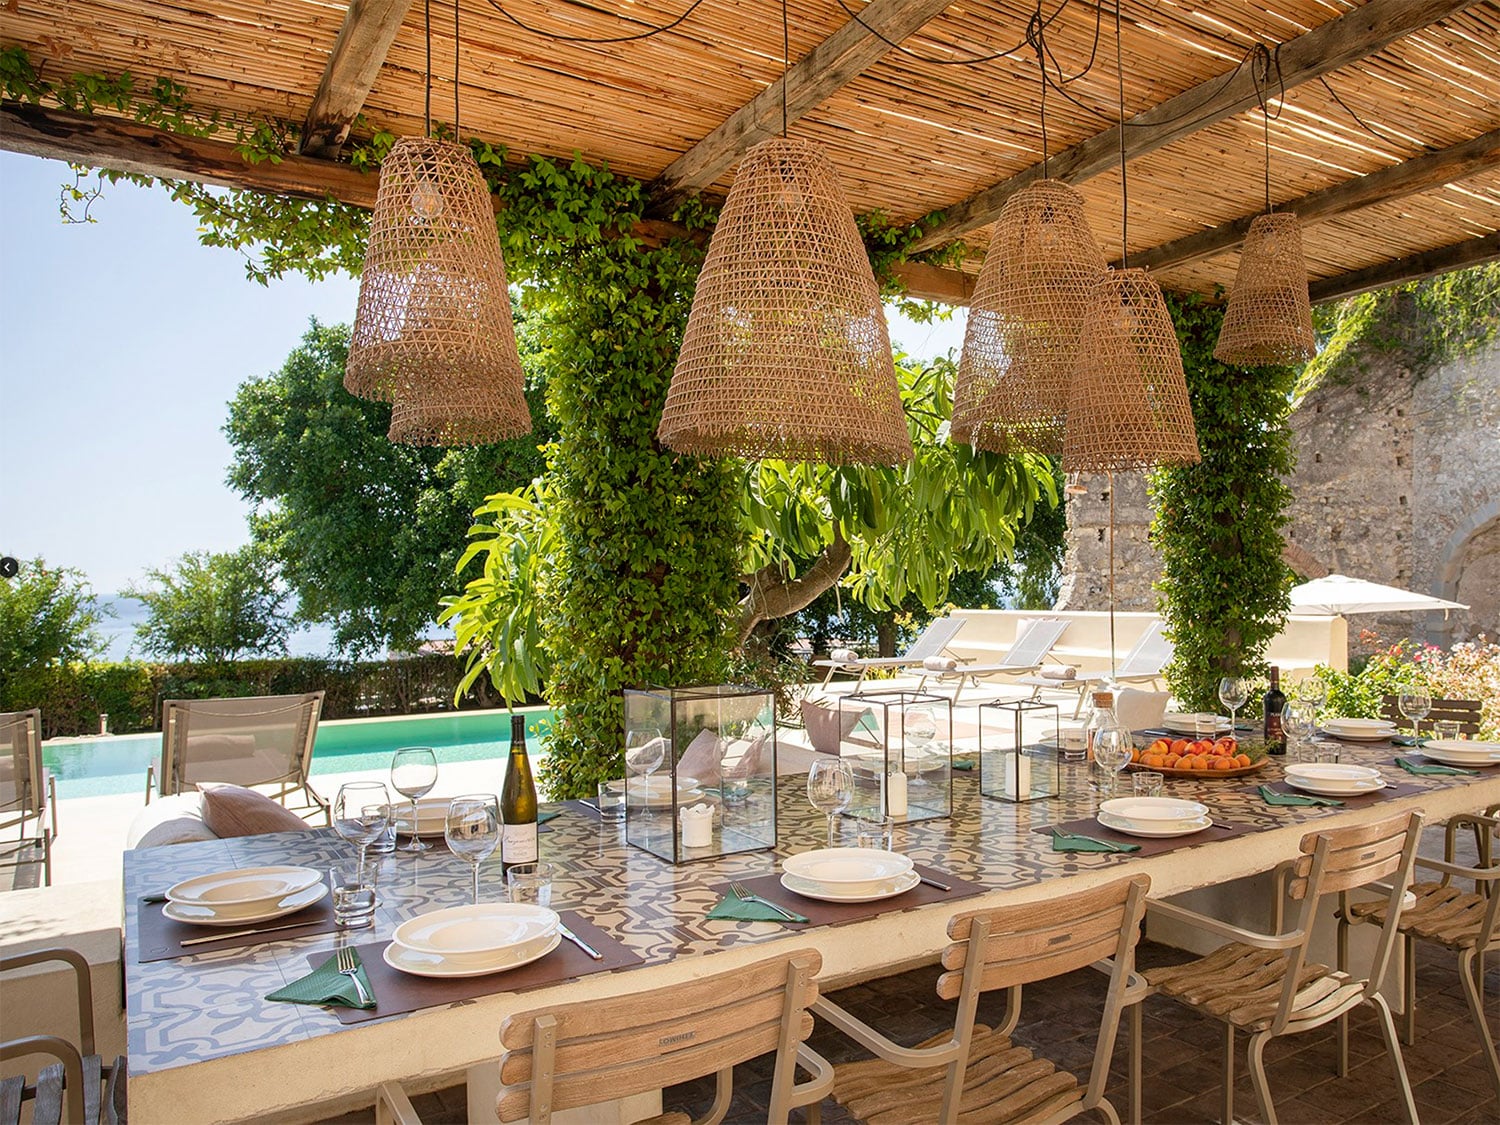 The outdoor, poolside dining area at La Prora, a seven-bedroom luxury villa in Taormina, Sicily, Italy.